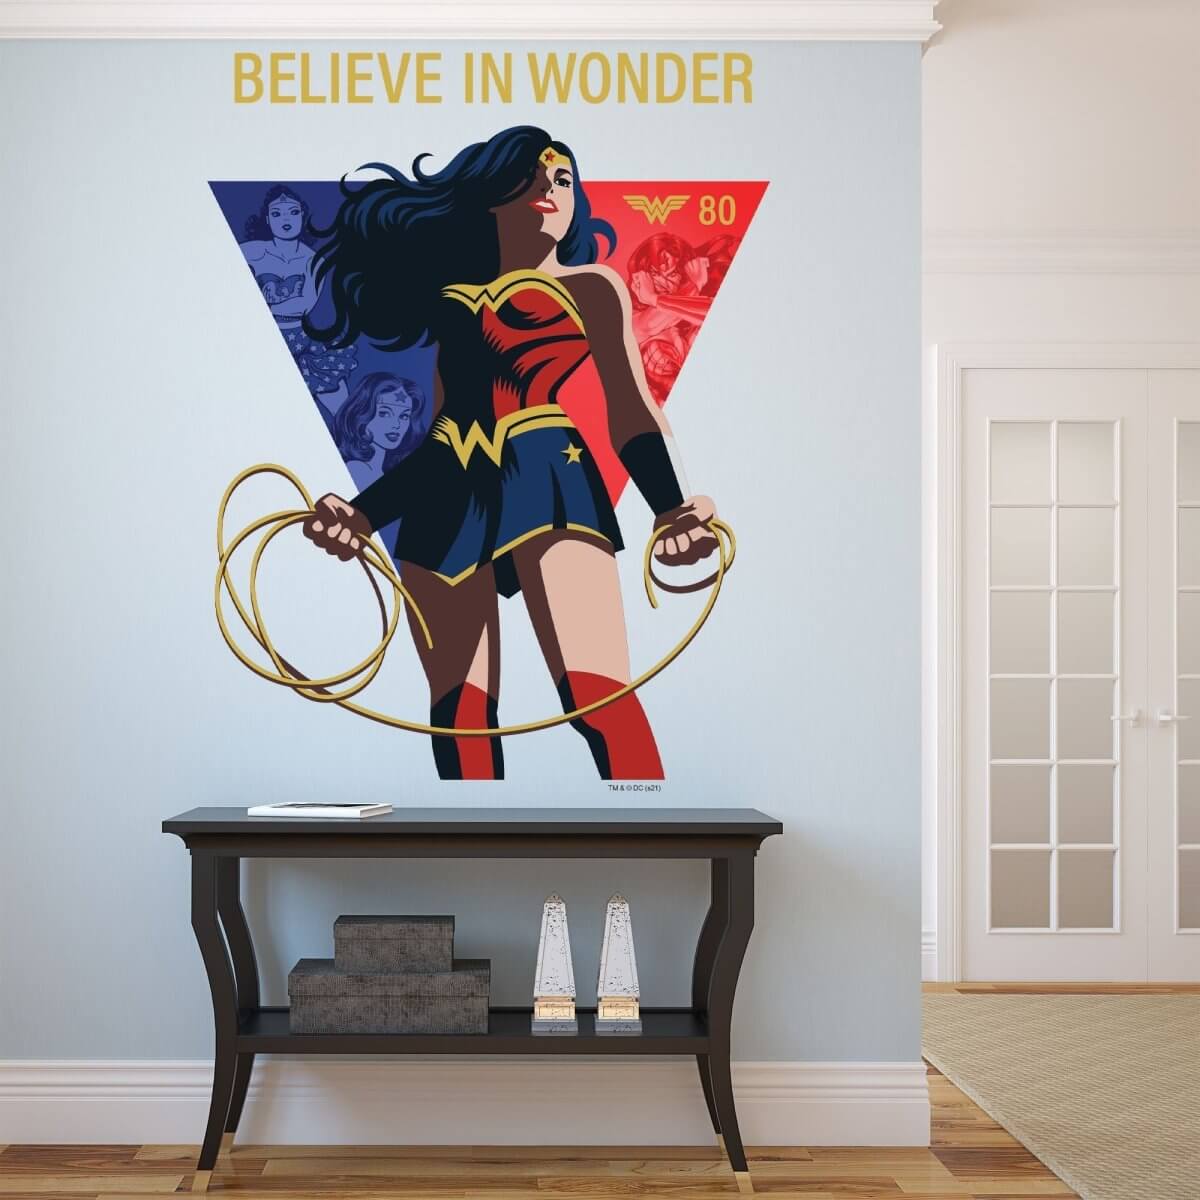 Kismet Decals Wonder Woman Believe in Wonder Officially Licensed Wall Sticker - Easy DIY DC Comics Home, Kids or Adult Bedroom, Office, Living Room Decor Wall Art - Kismet Decals